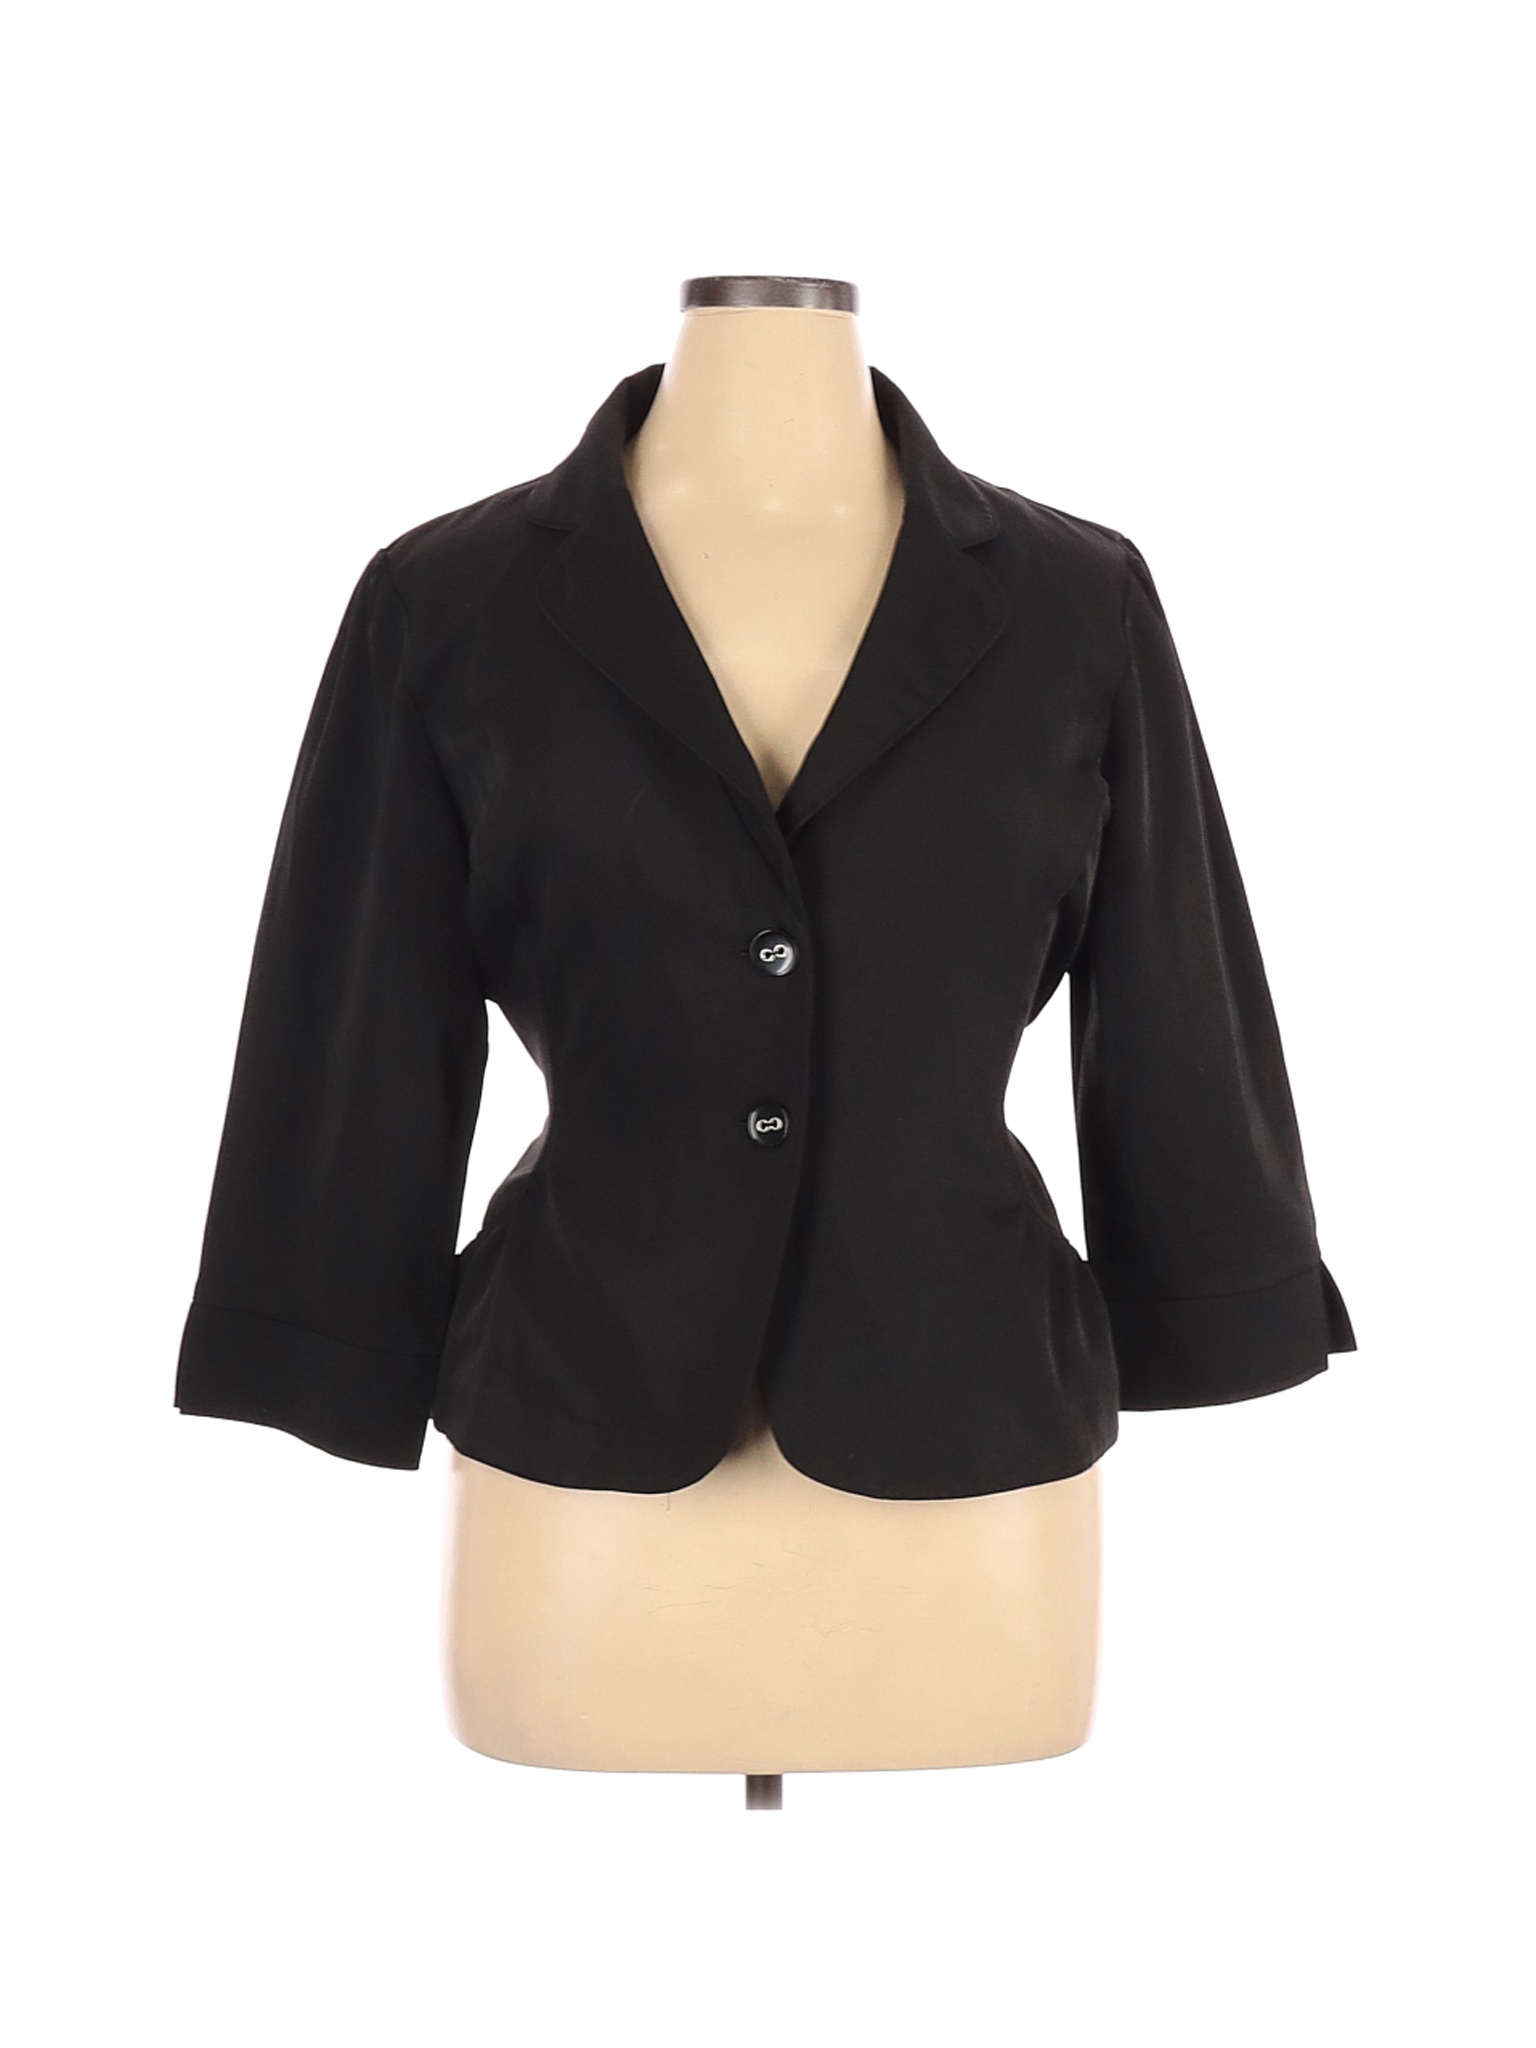 Courtenay Women Black Jacket 16 | eBay